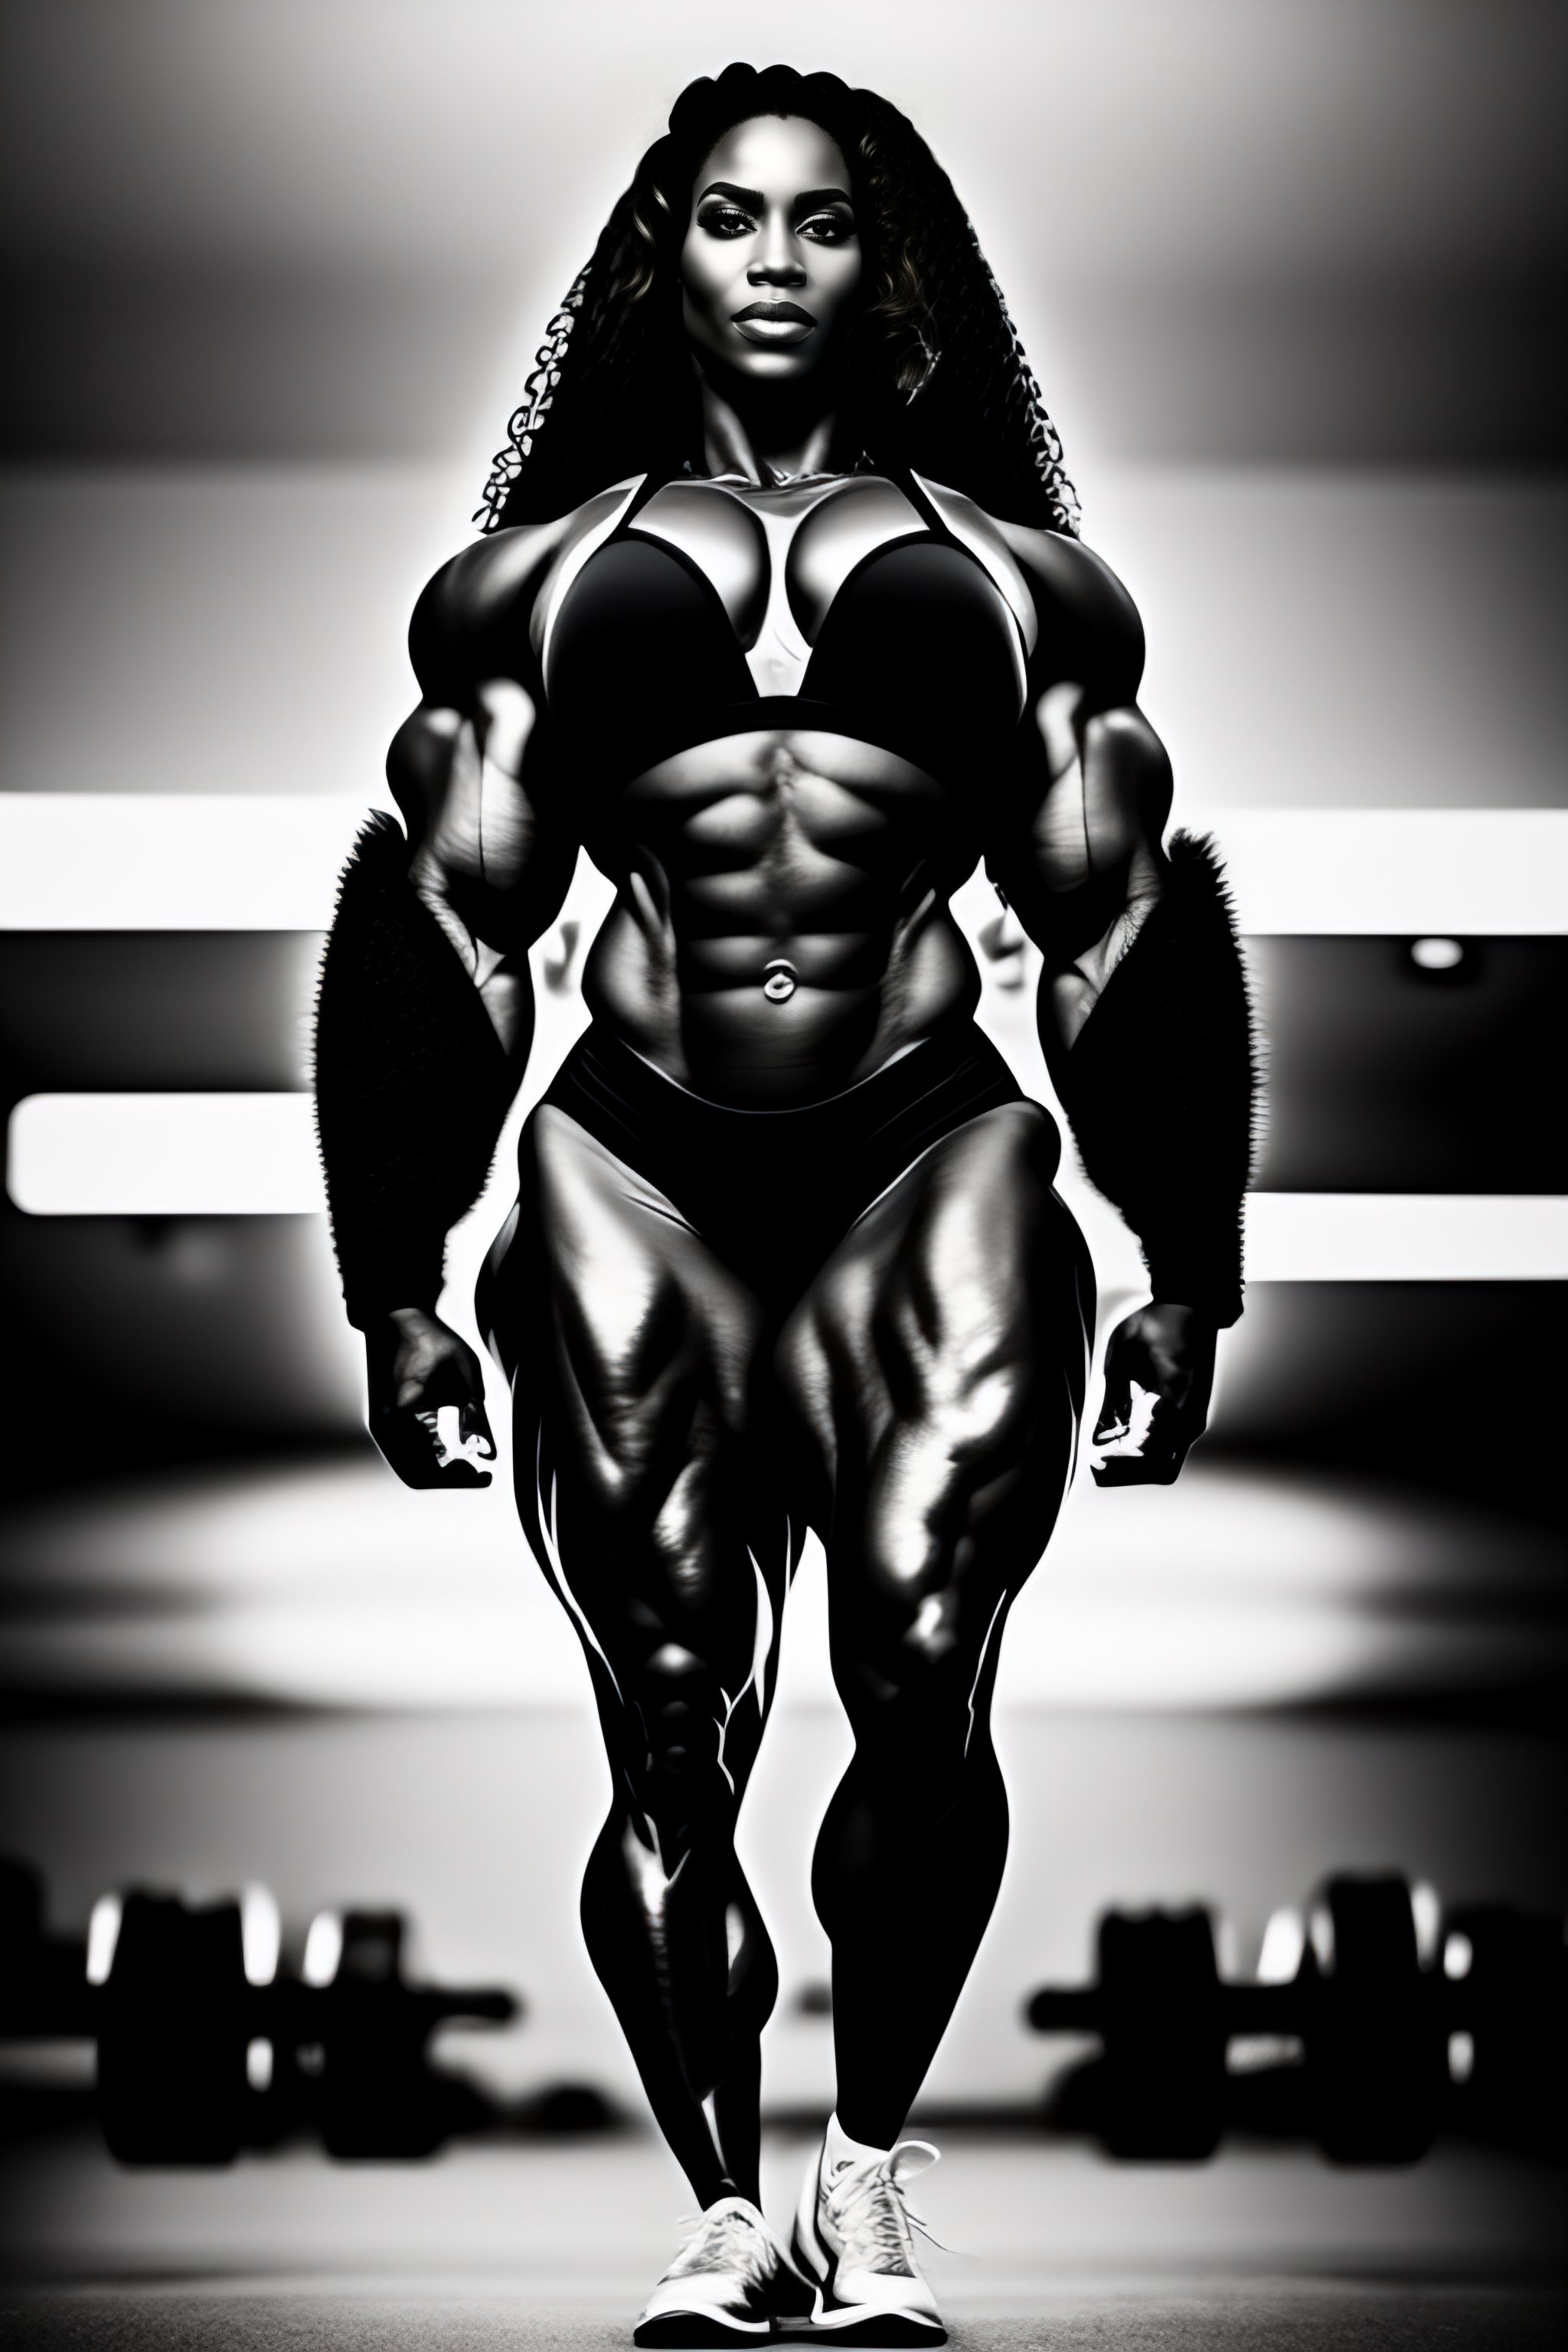 prompthunt: gigachad as woman, full body photo, Ernest Khalimov,  bodybuilder, black and white photograph